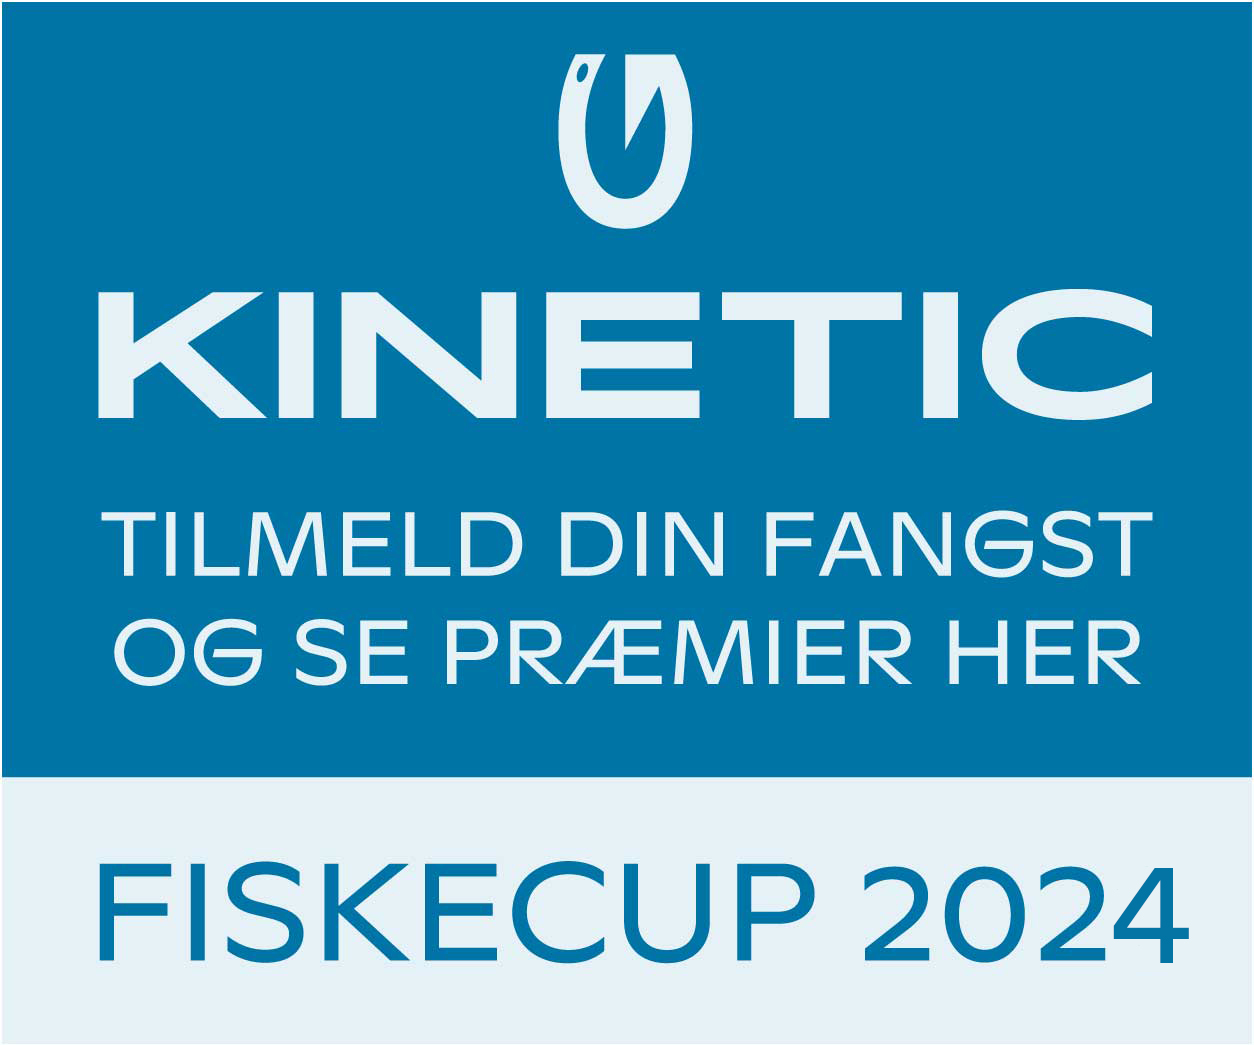 Kinetic Fiskecup 2024